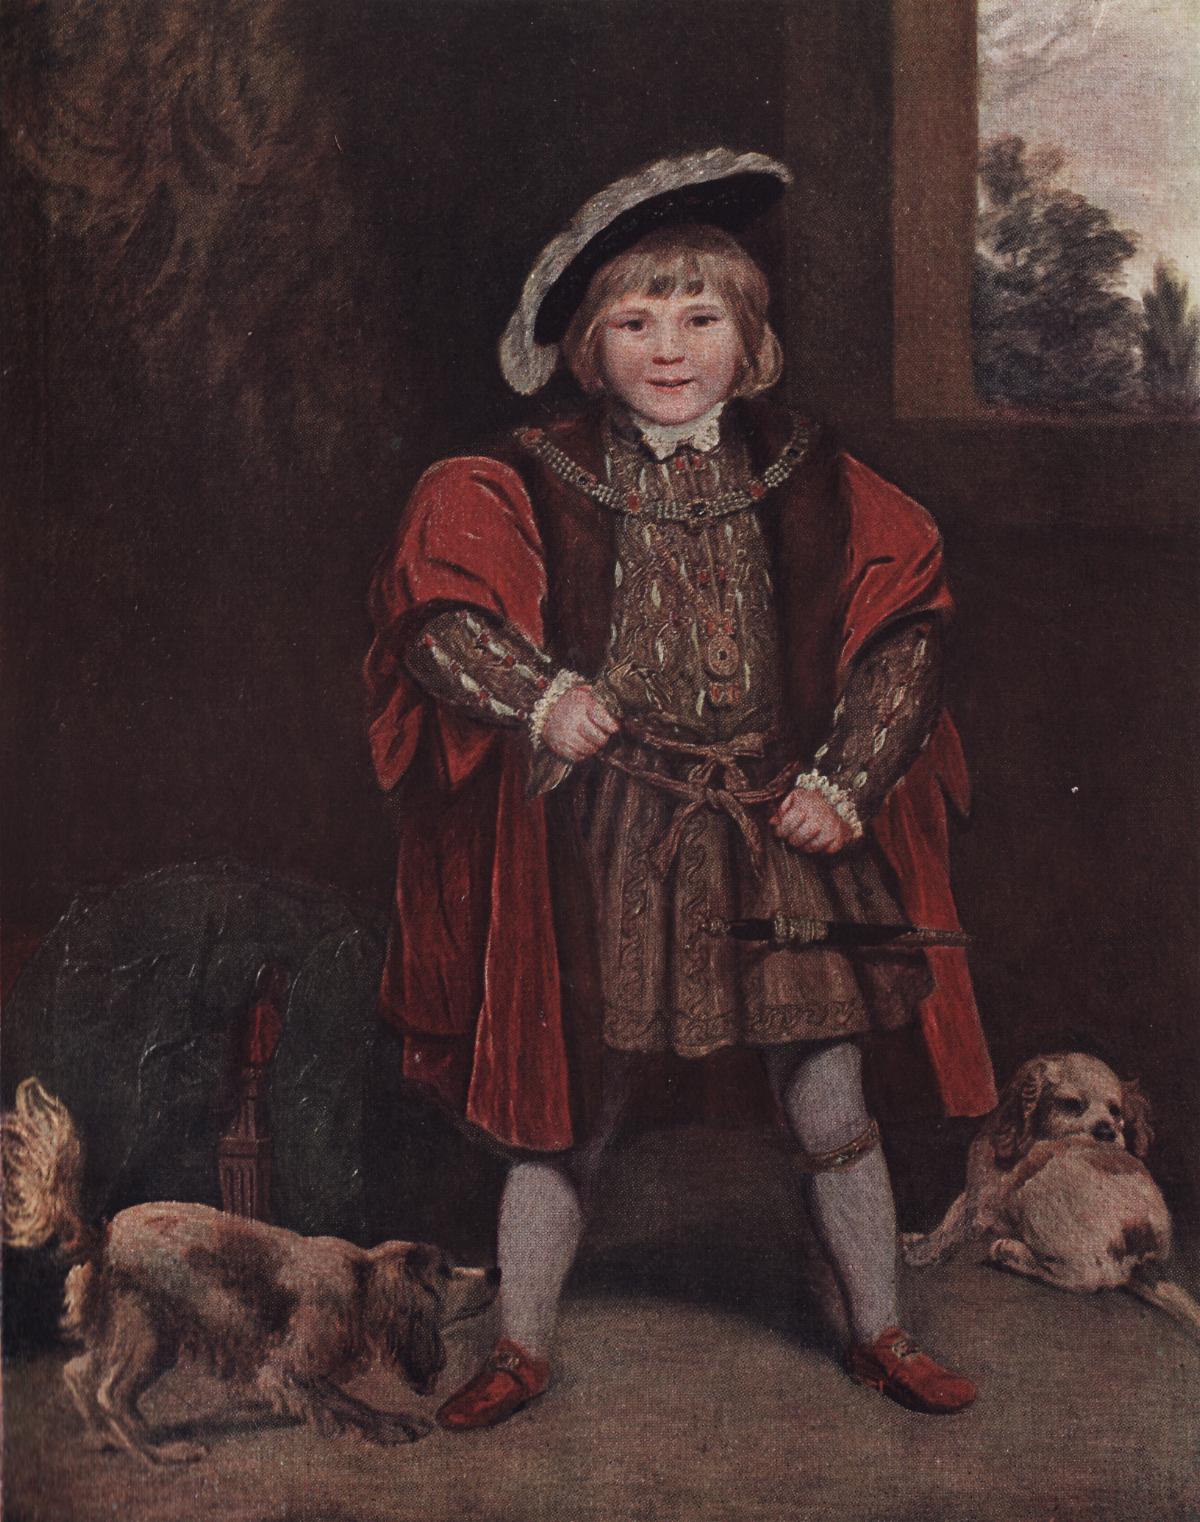 Master Crewe as Henry VIII by Reynolds